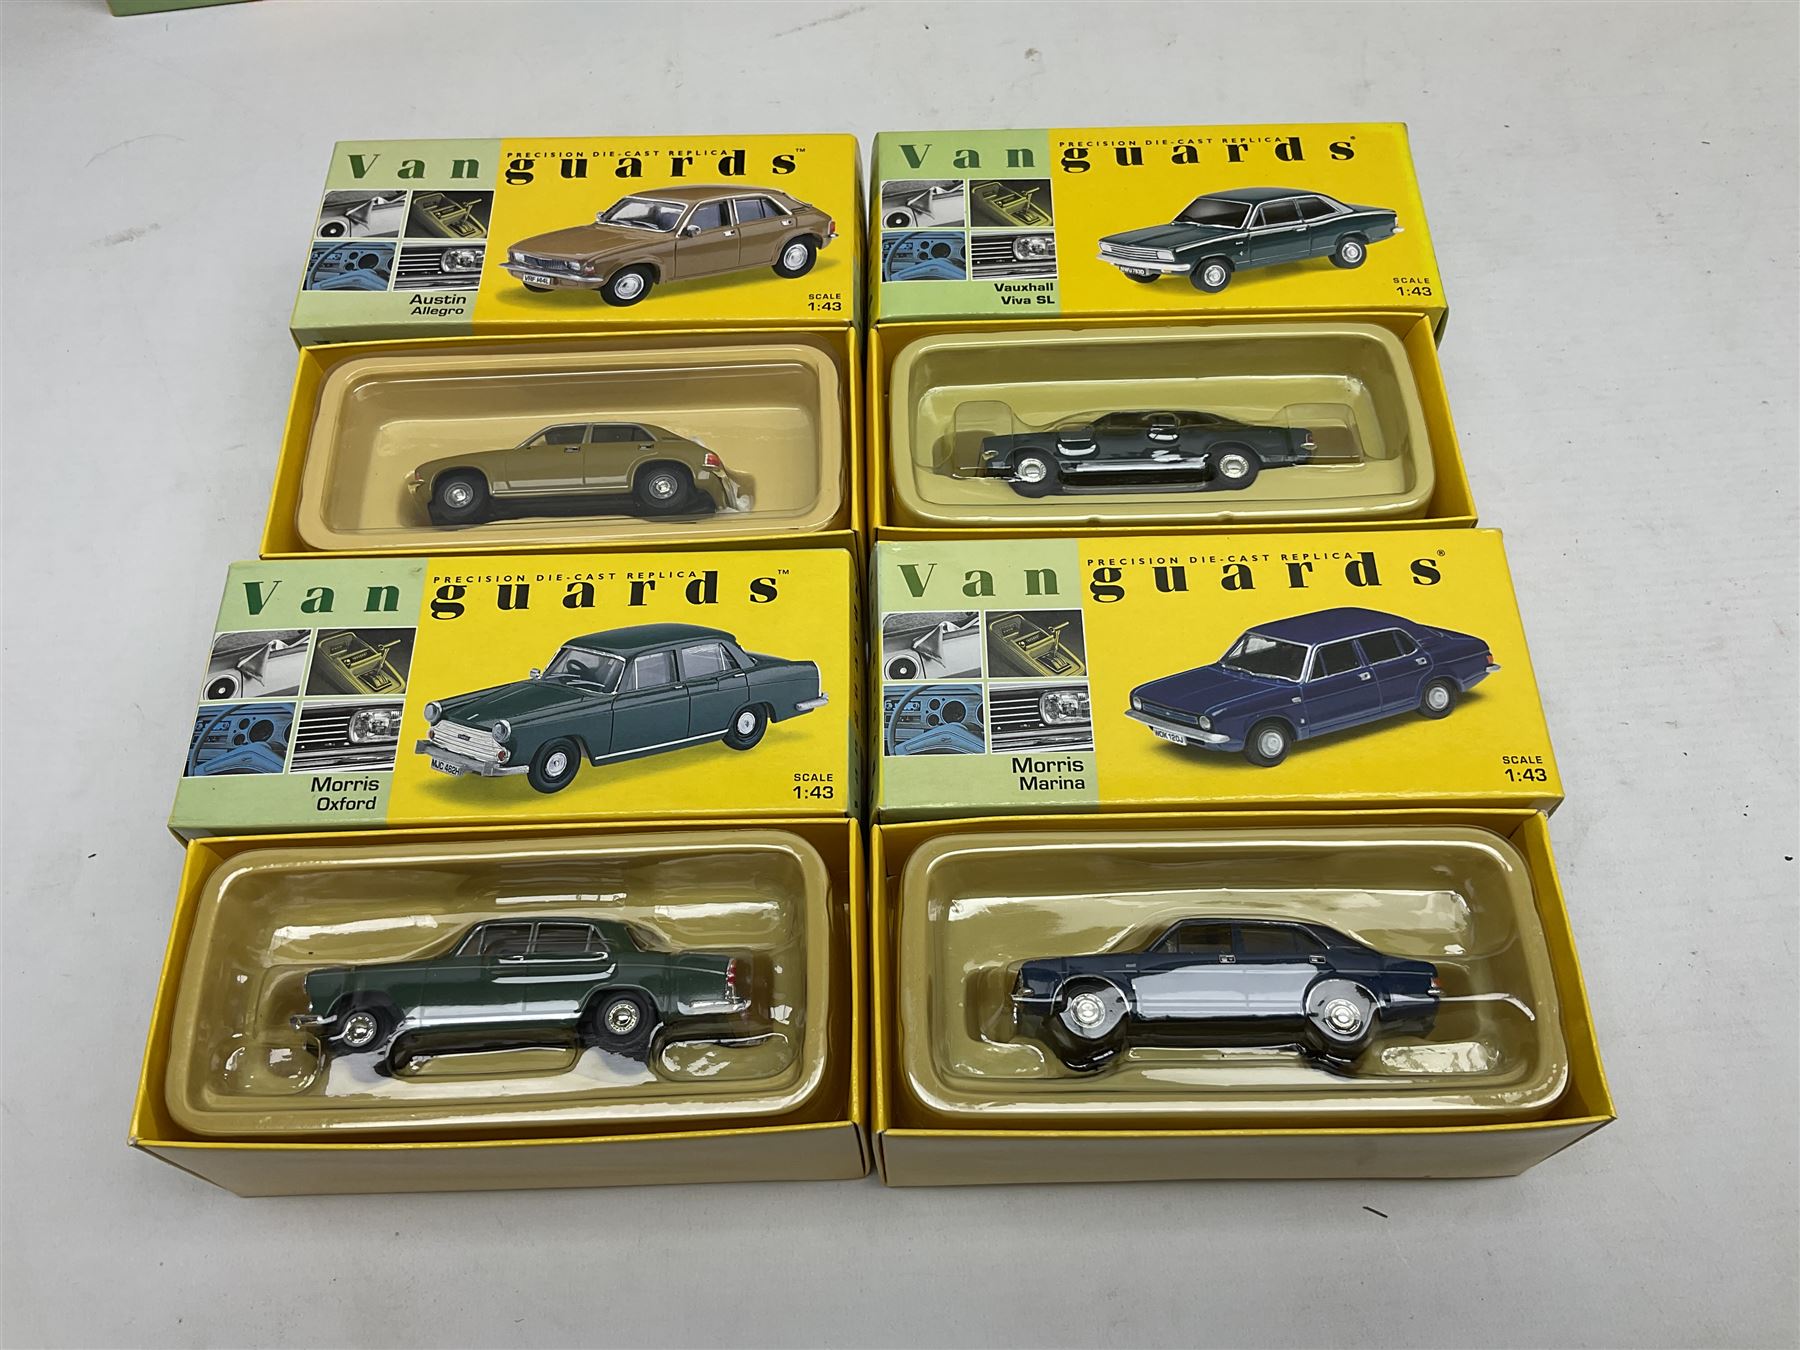 Twenty-five Lledo Vanguards 1:43 scale Limited Edition die-cast models including Ford Popular Saloon - Image 4 of 8